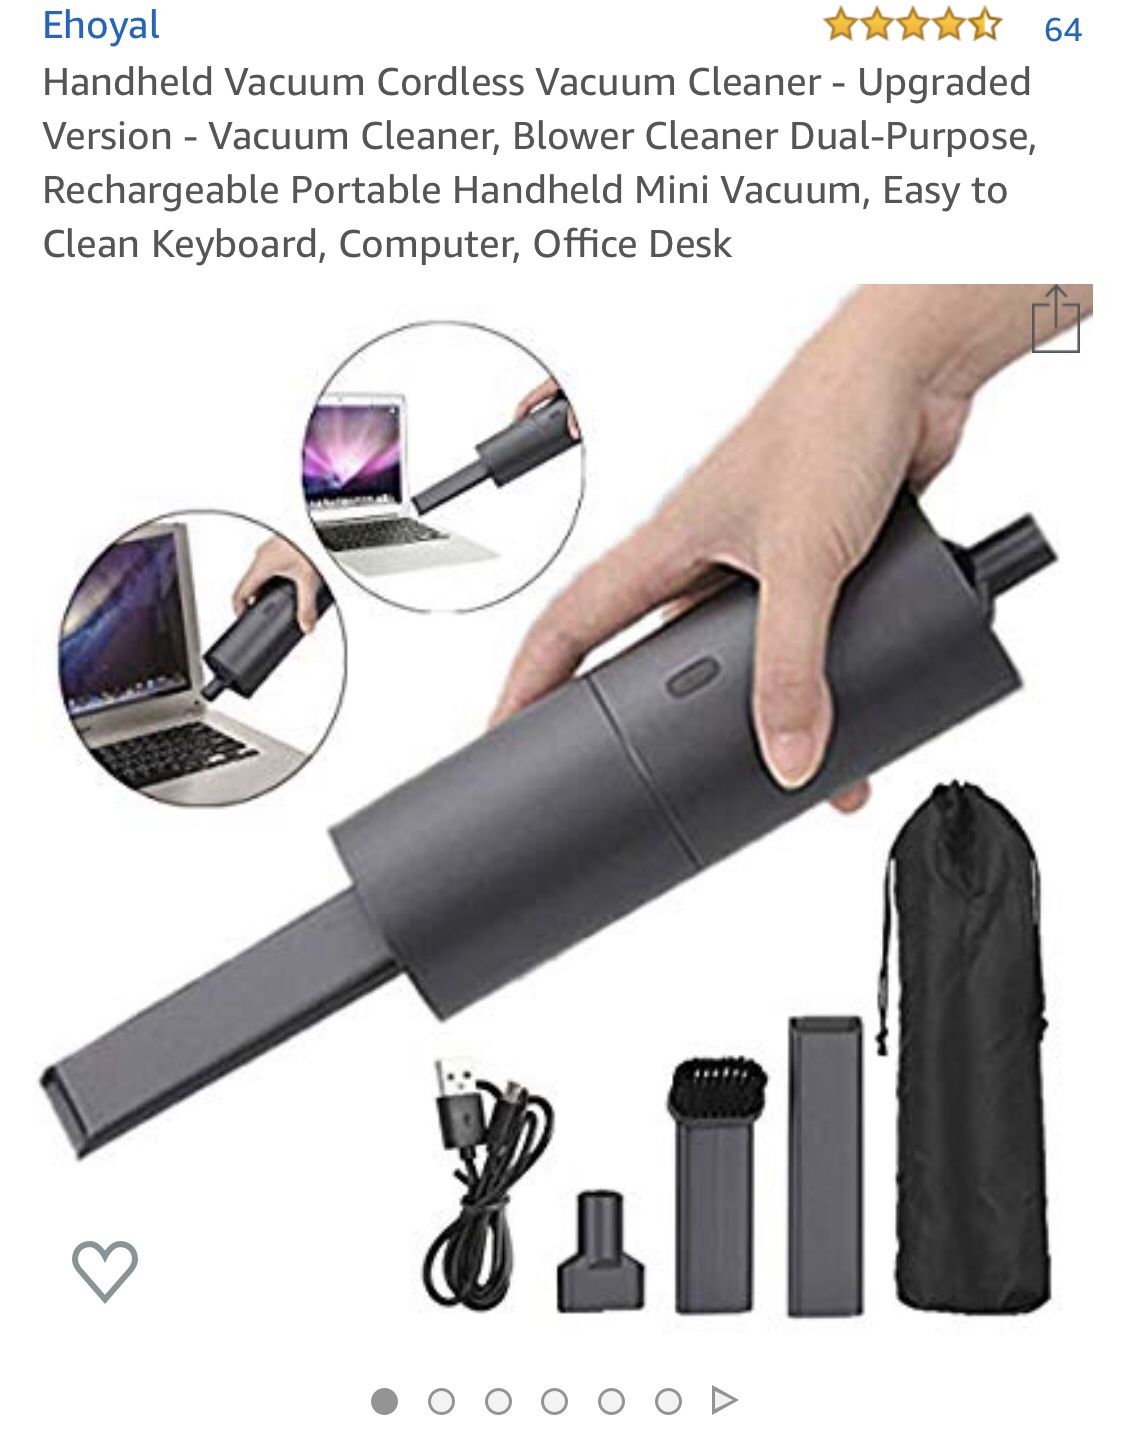 Handheld cordless vacuum cleaner